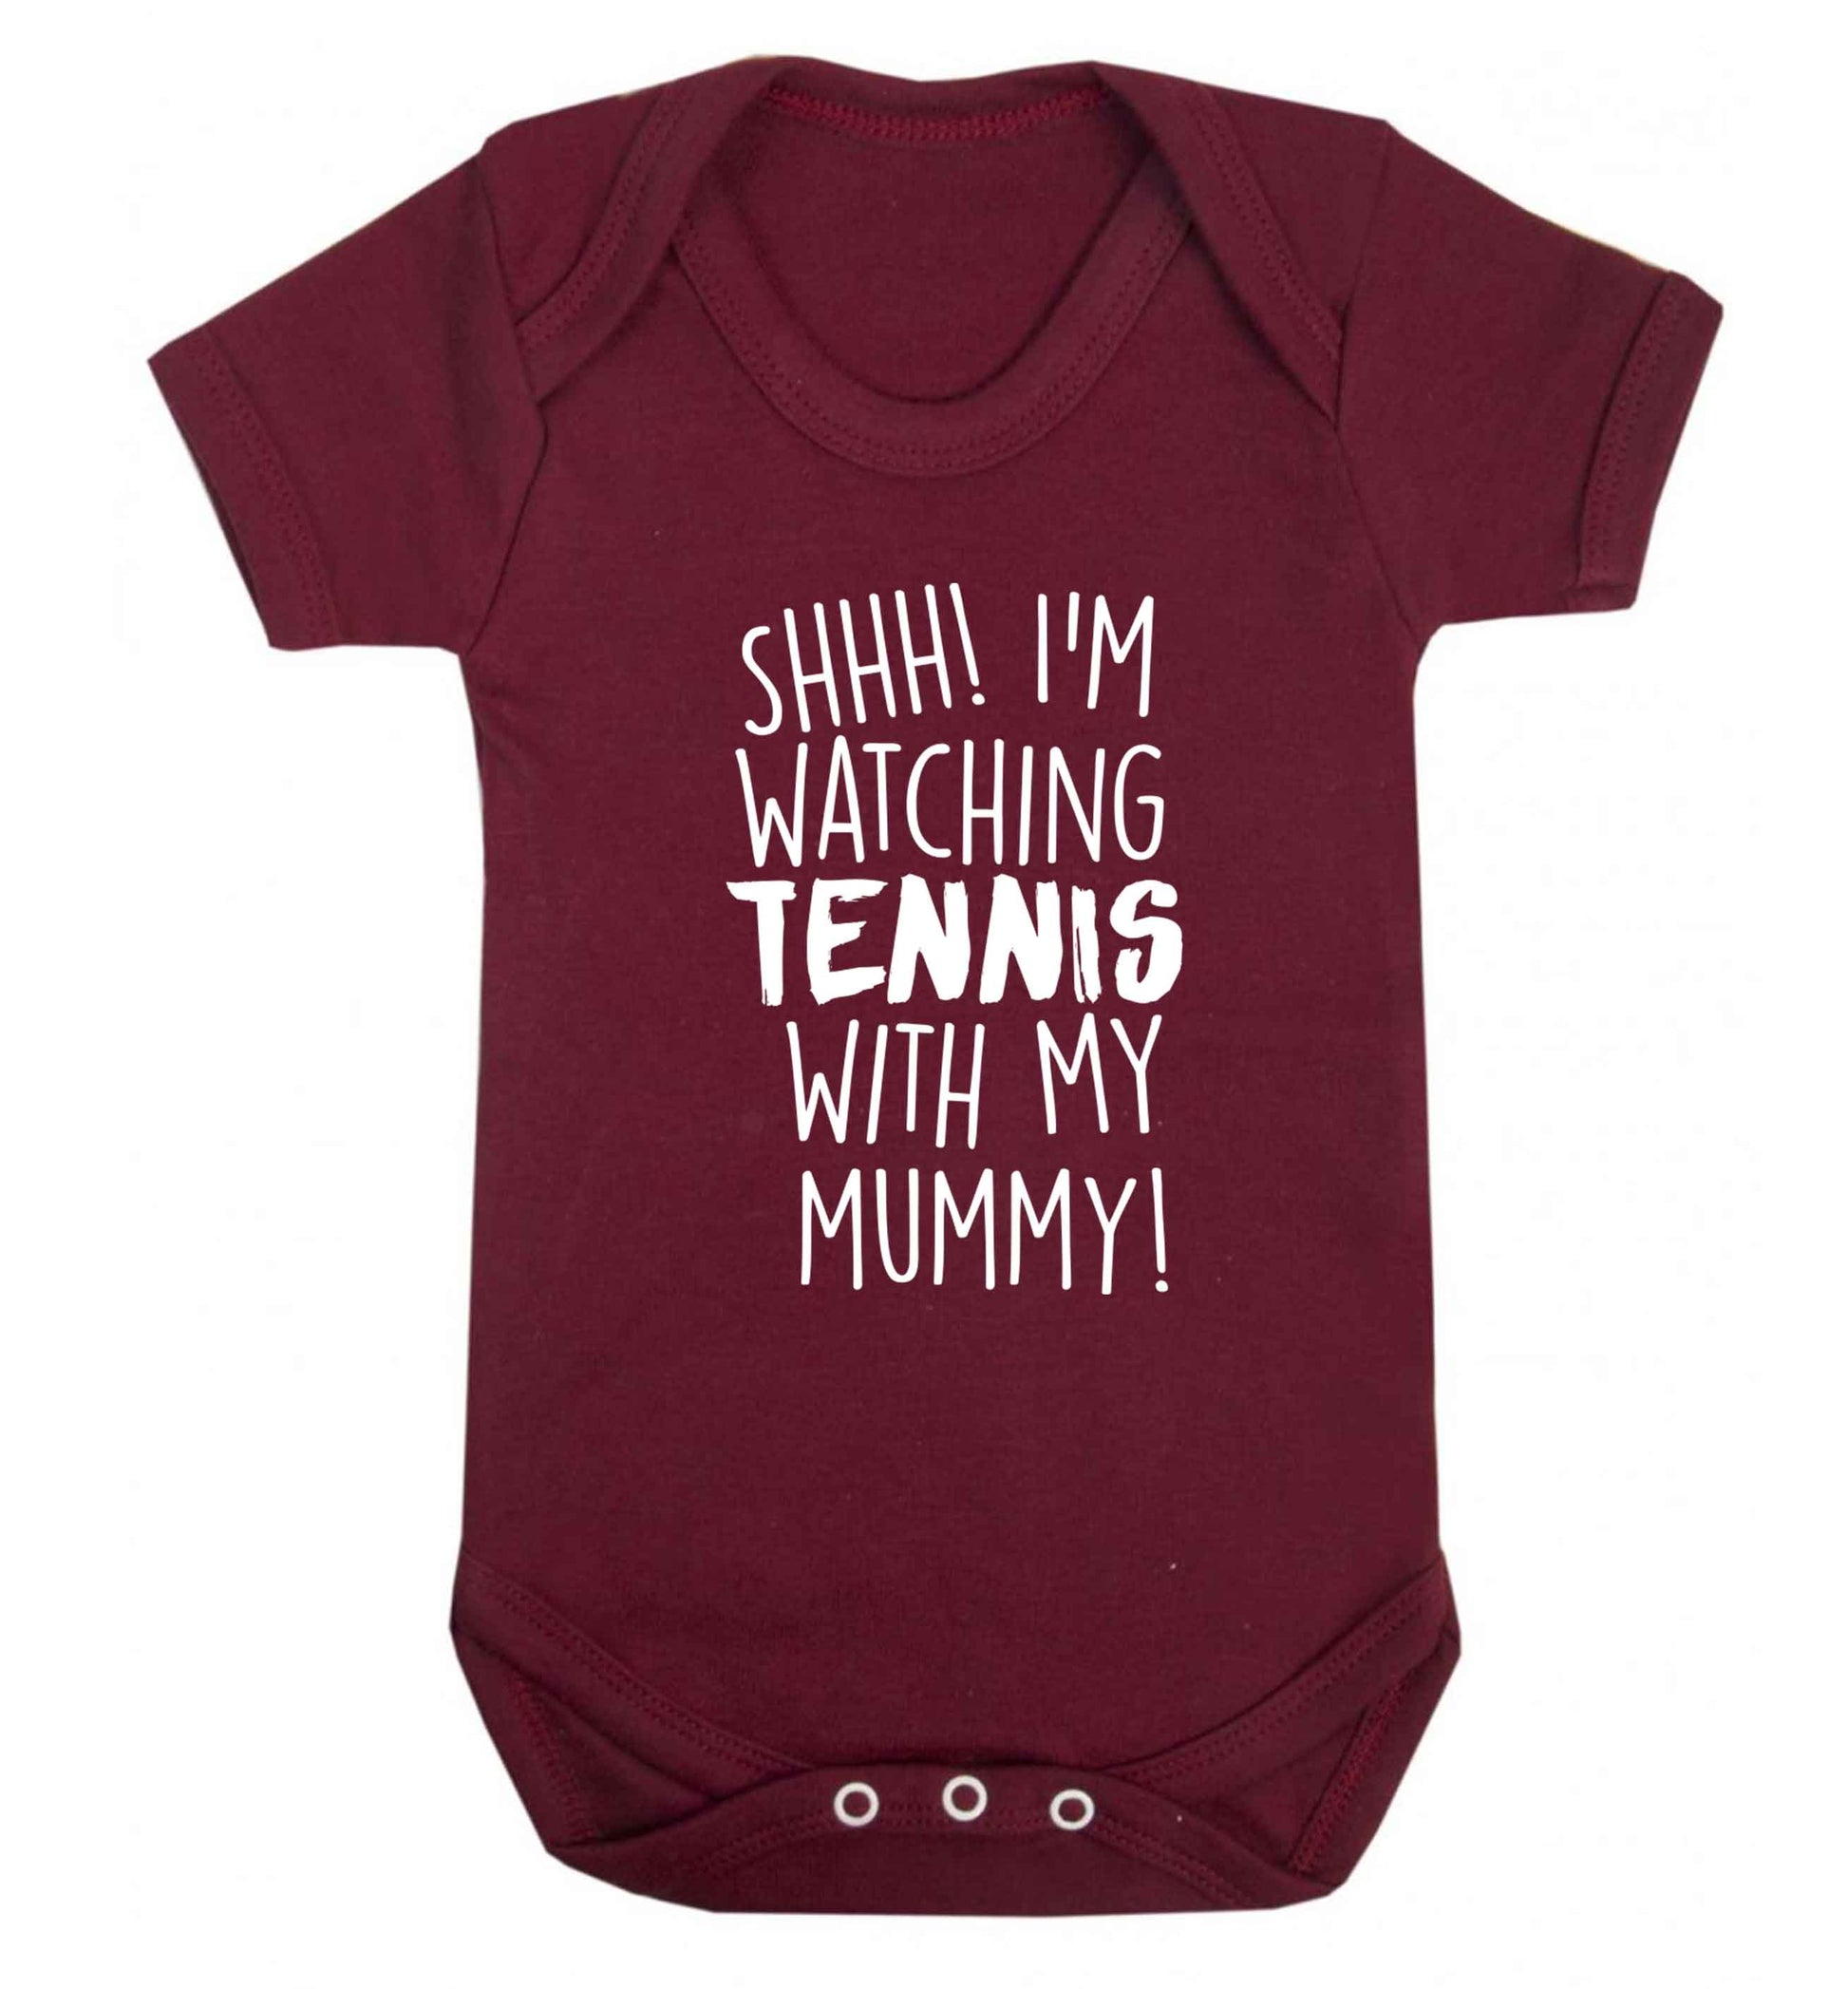 Shh! I'm watching tennis with my mummy! Baby Vest maroon 18-24 months